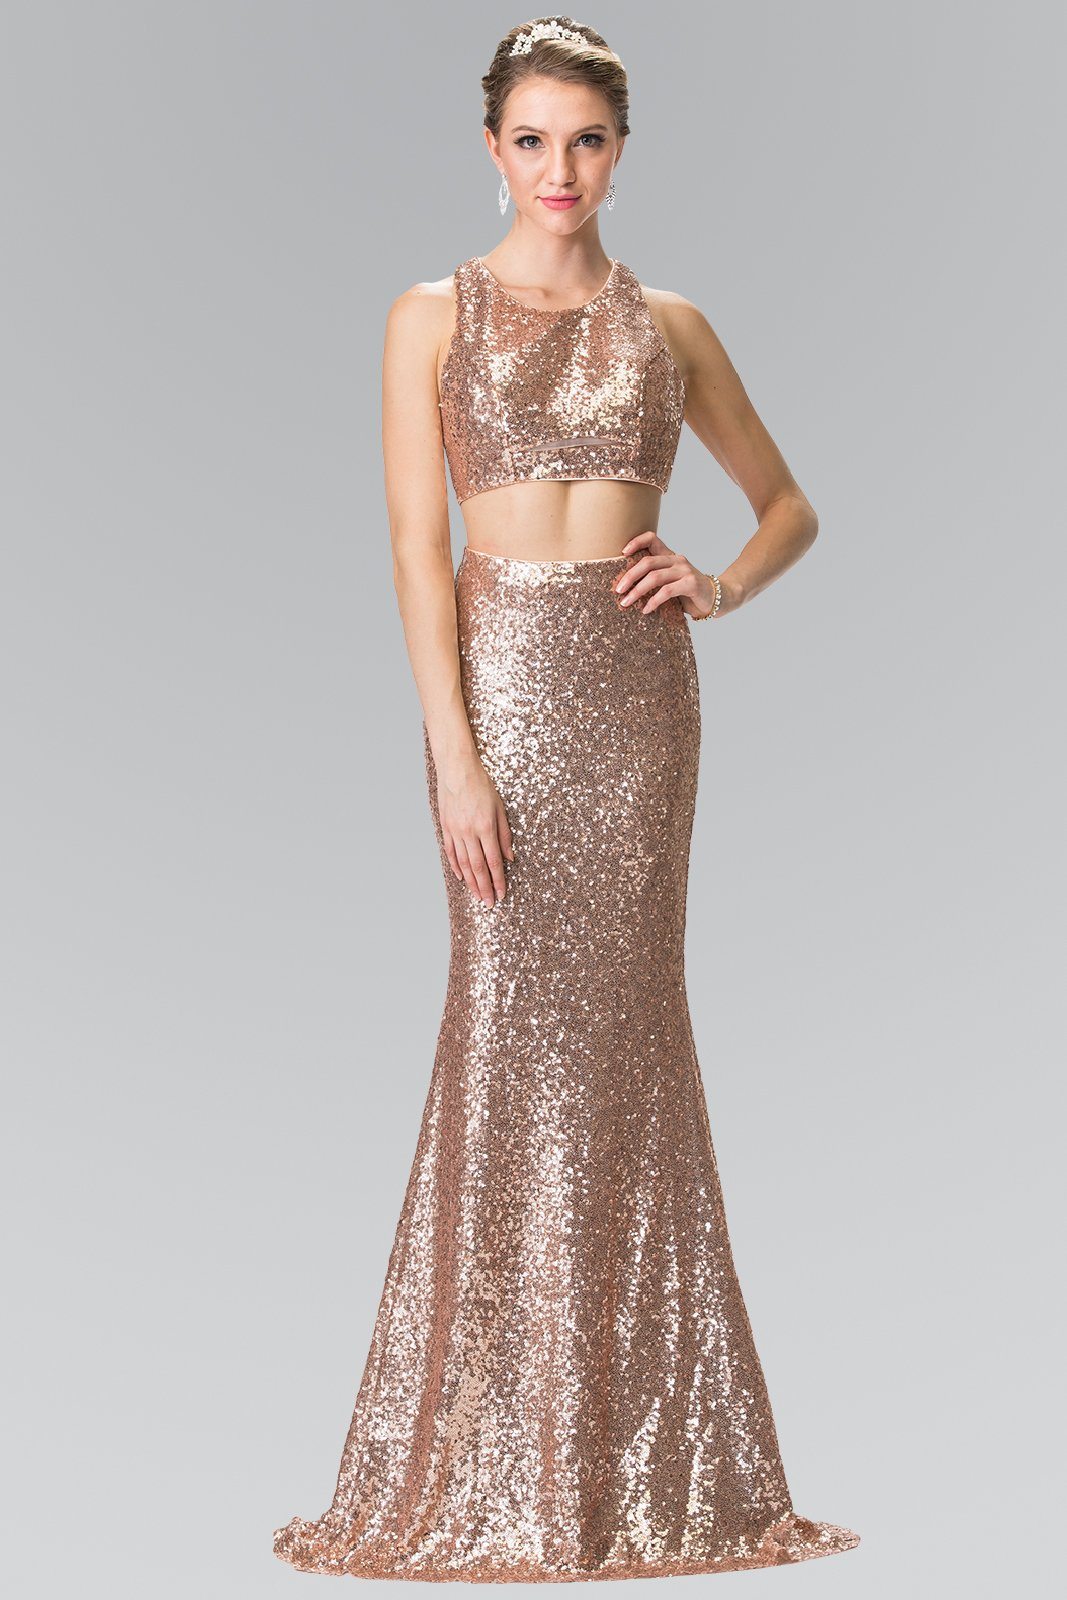 gold 2 piece prom dress